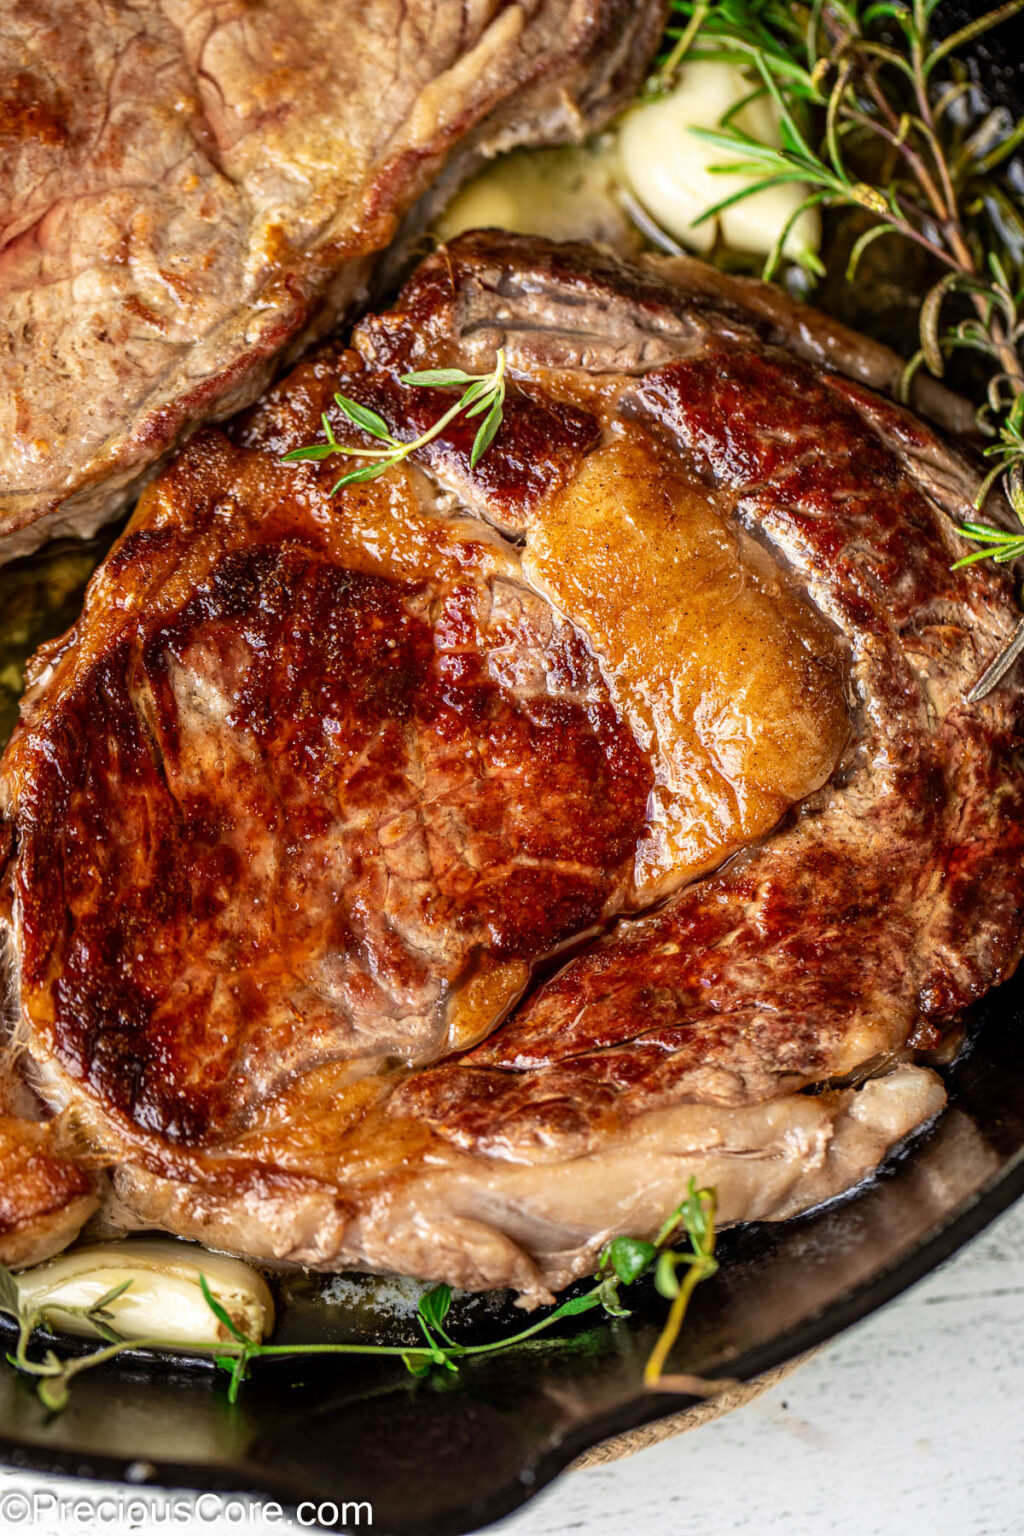 Pan Seared Ribeye Steaks Precious Core 